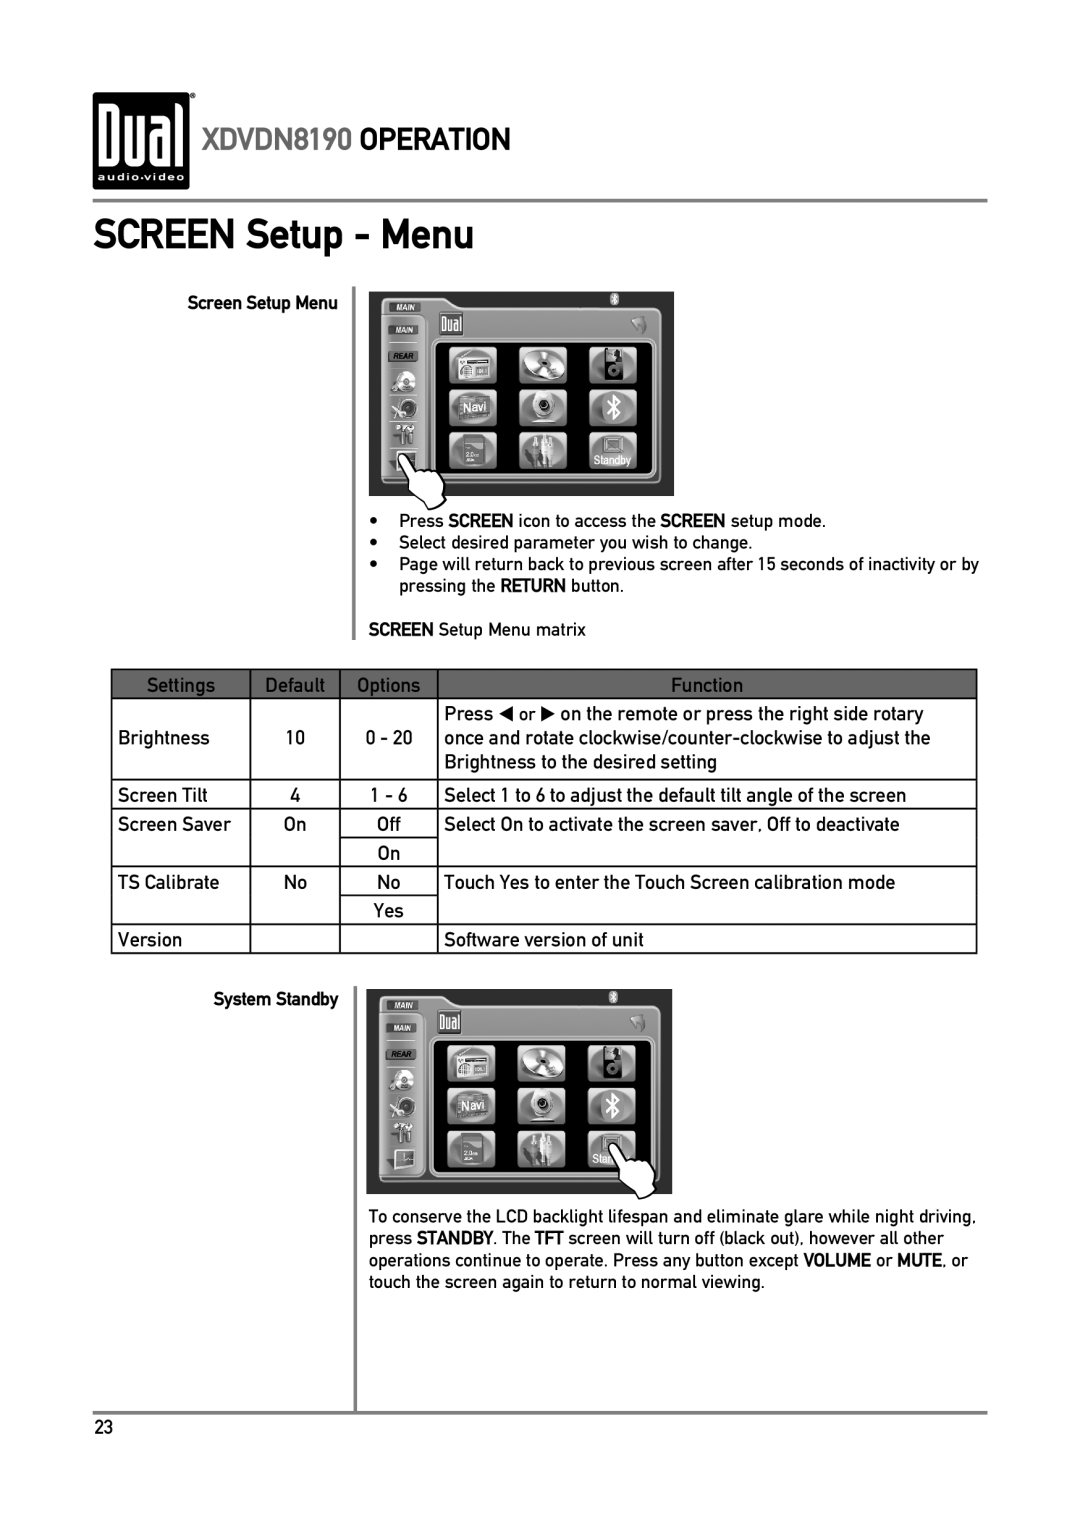 Dual owner manual SCREEN Setup - Menu, XDVDN8190 OPERATION, Screen Setup Menu, System Standby 